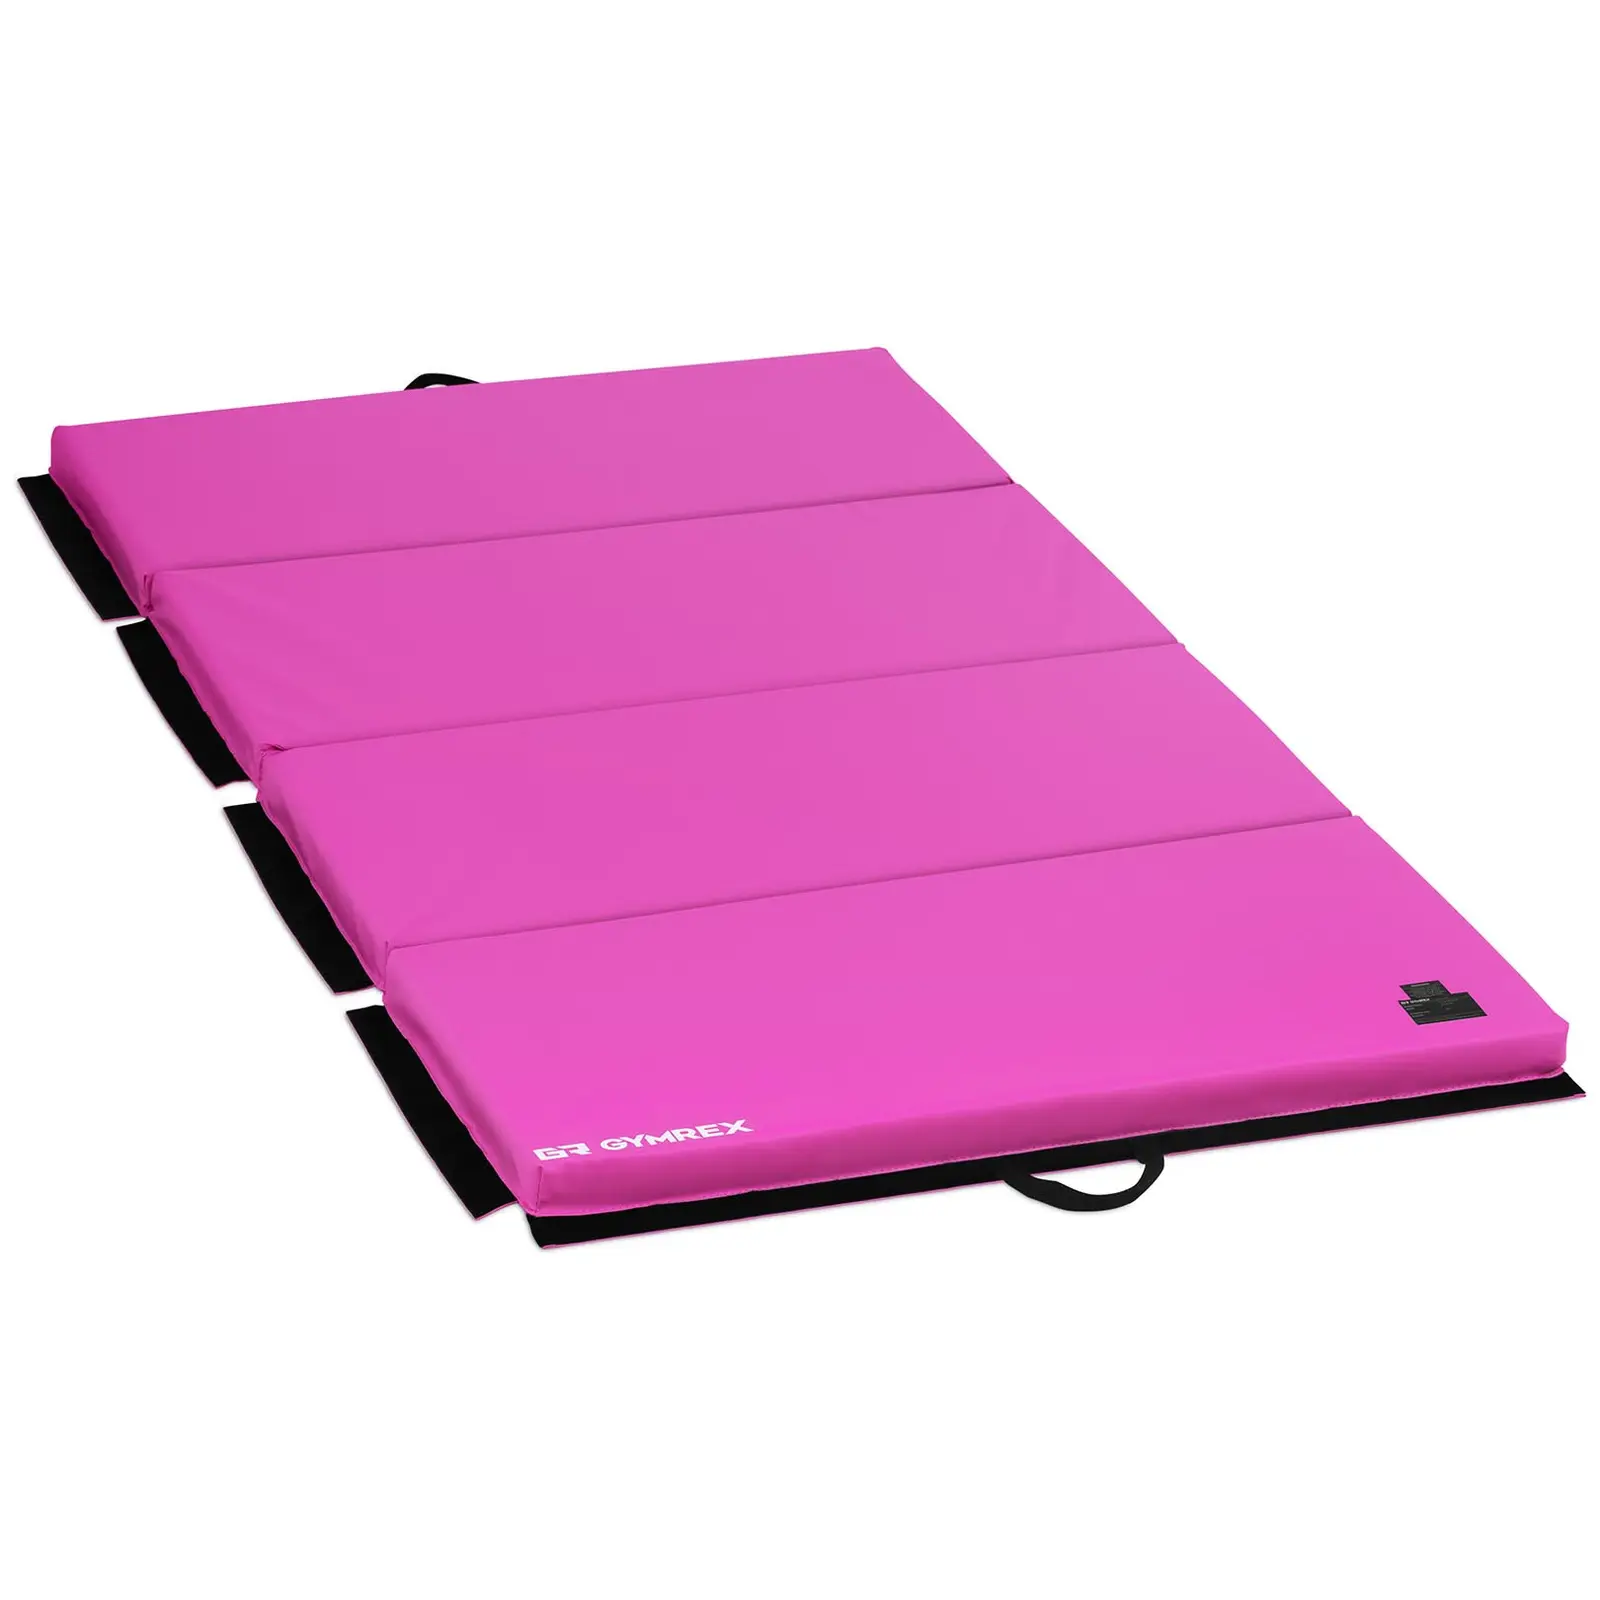 Colchoneta de gimnasia - 200 x 100 x 5 cm - plegable - rosa salmón/negro - hasta 170kg